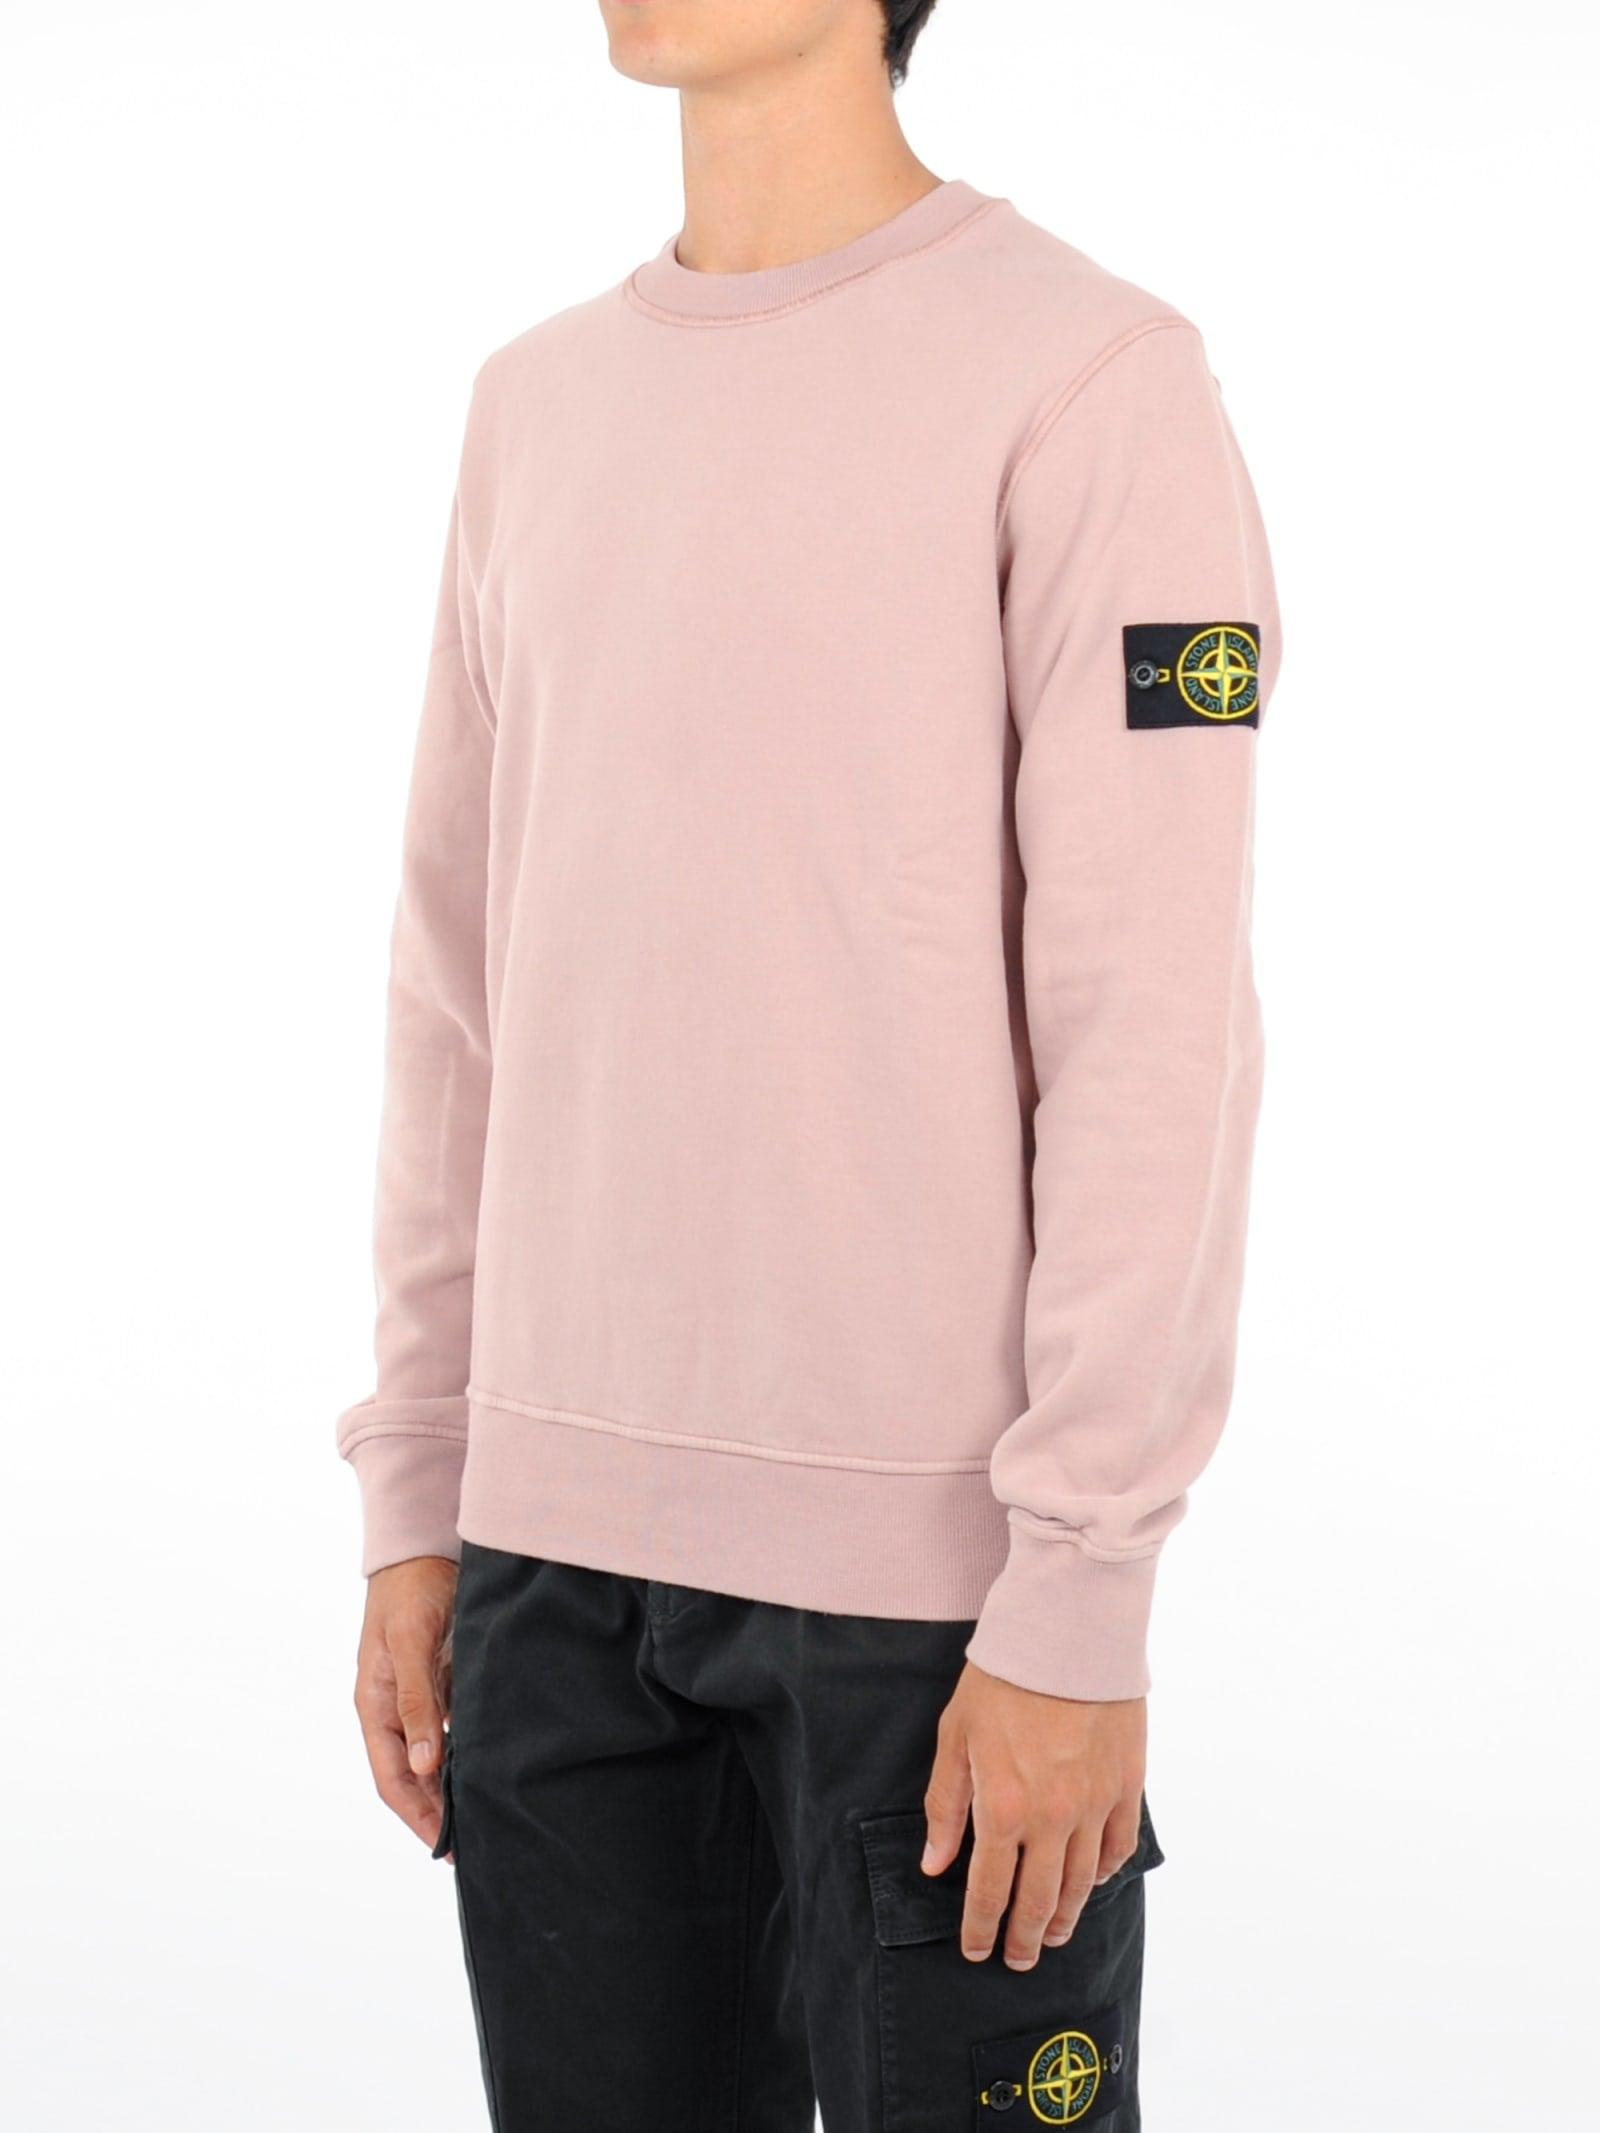 Stone Island Sweat Shirt Sweatshirt in Pink for Men | Lyst